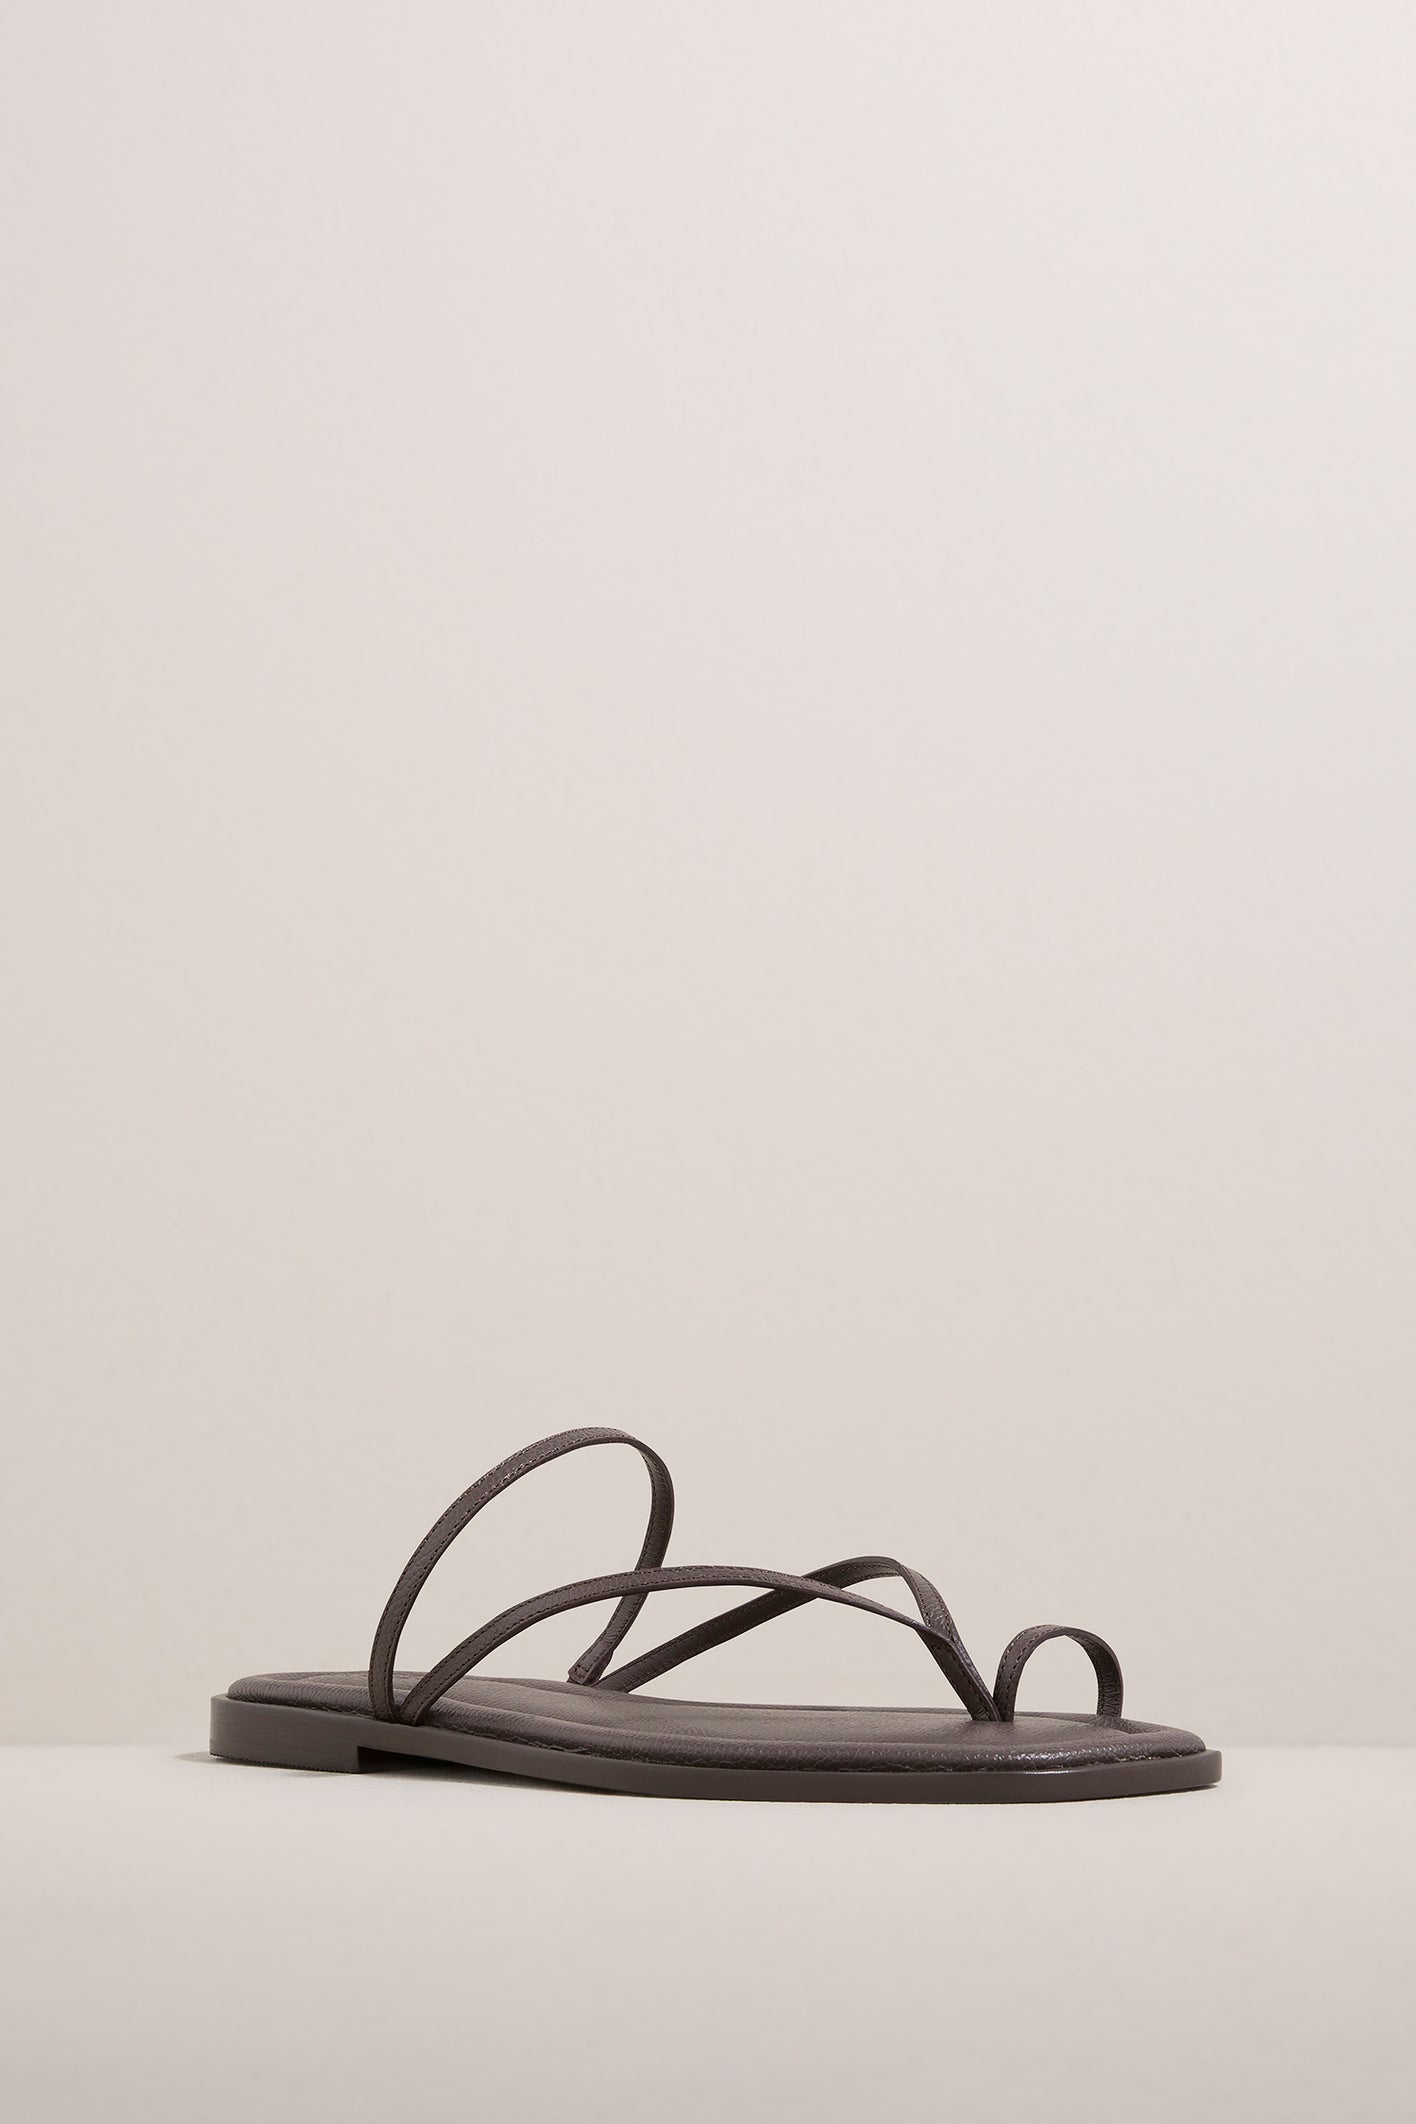 A.Emery | The Turner Sandal - Graphite